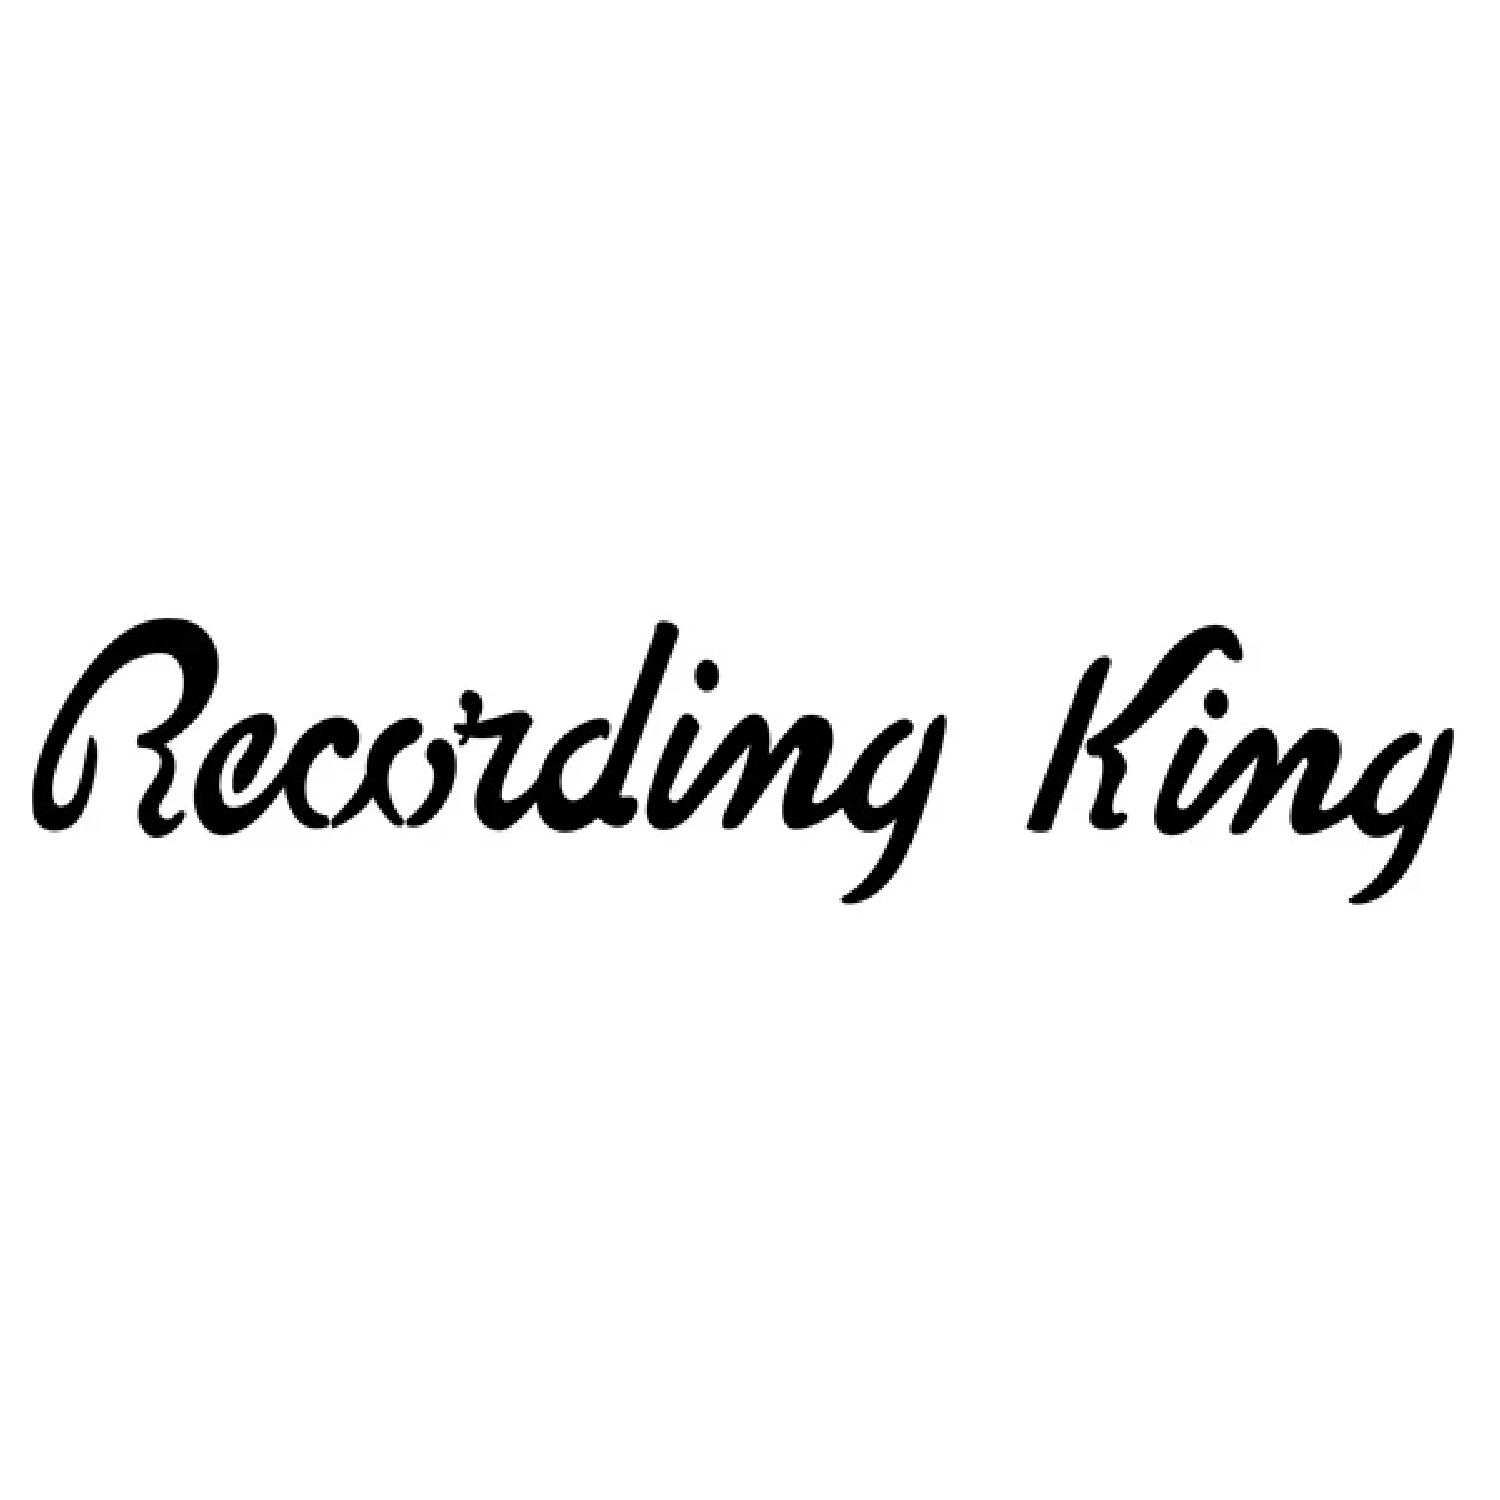 Recording King